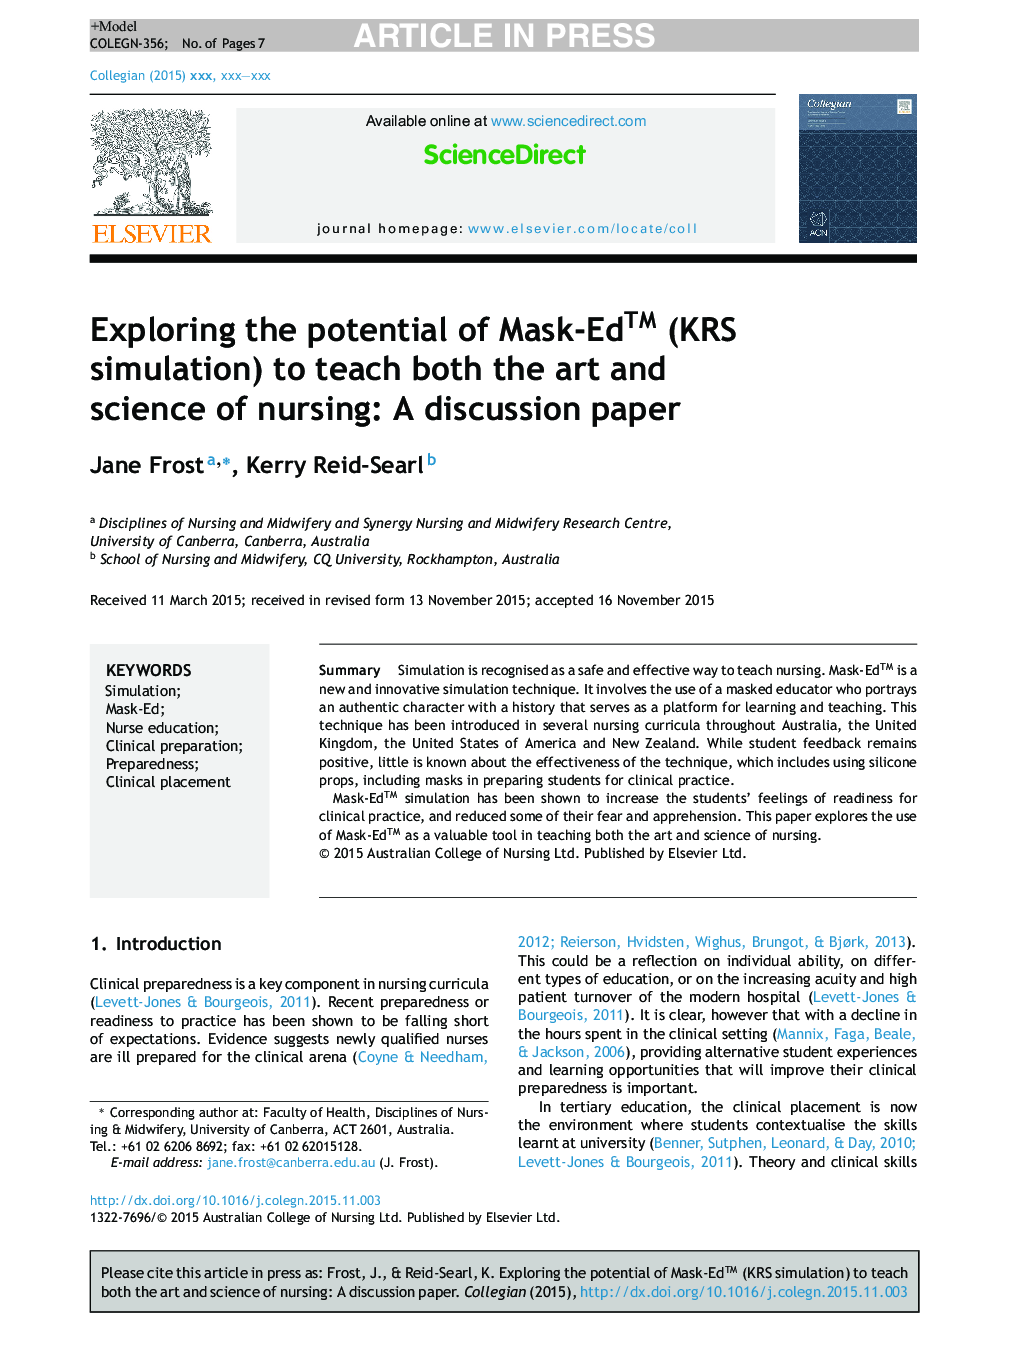 Exploring the potential of Mask-Edâ¢ (KRS simulation) to teach both the art and science of nursing: A discussion paper